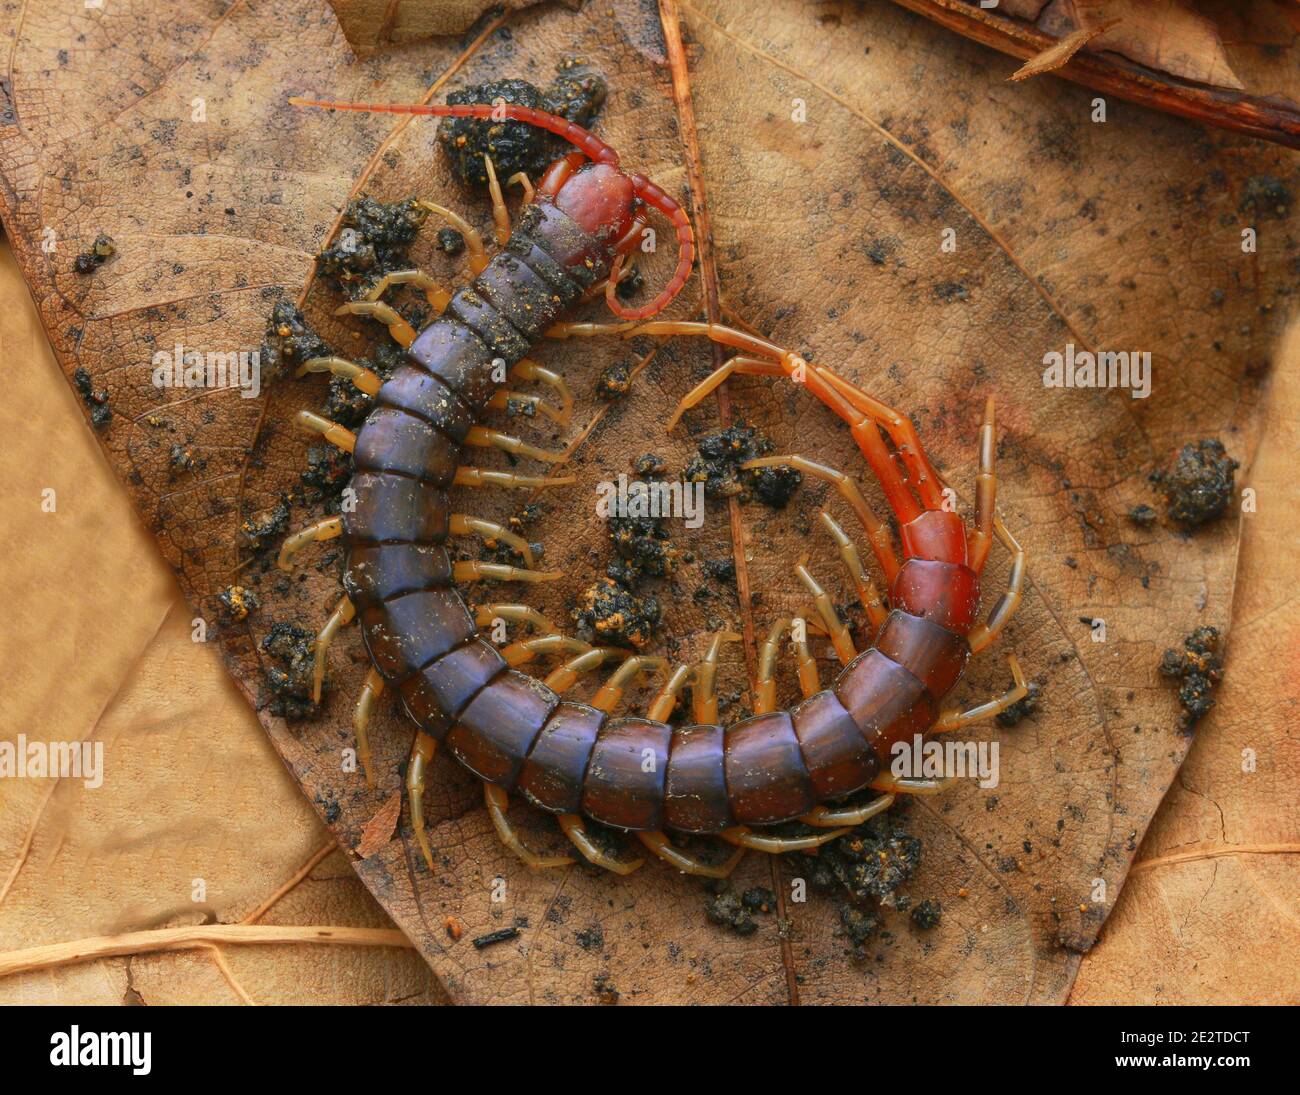 Red headed centipede Otostigmus, Chilopoda, with many legs Stock Photo